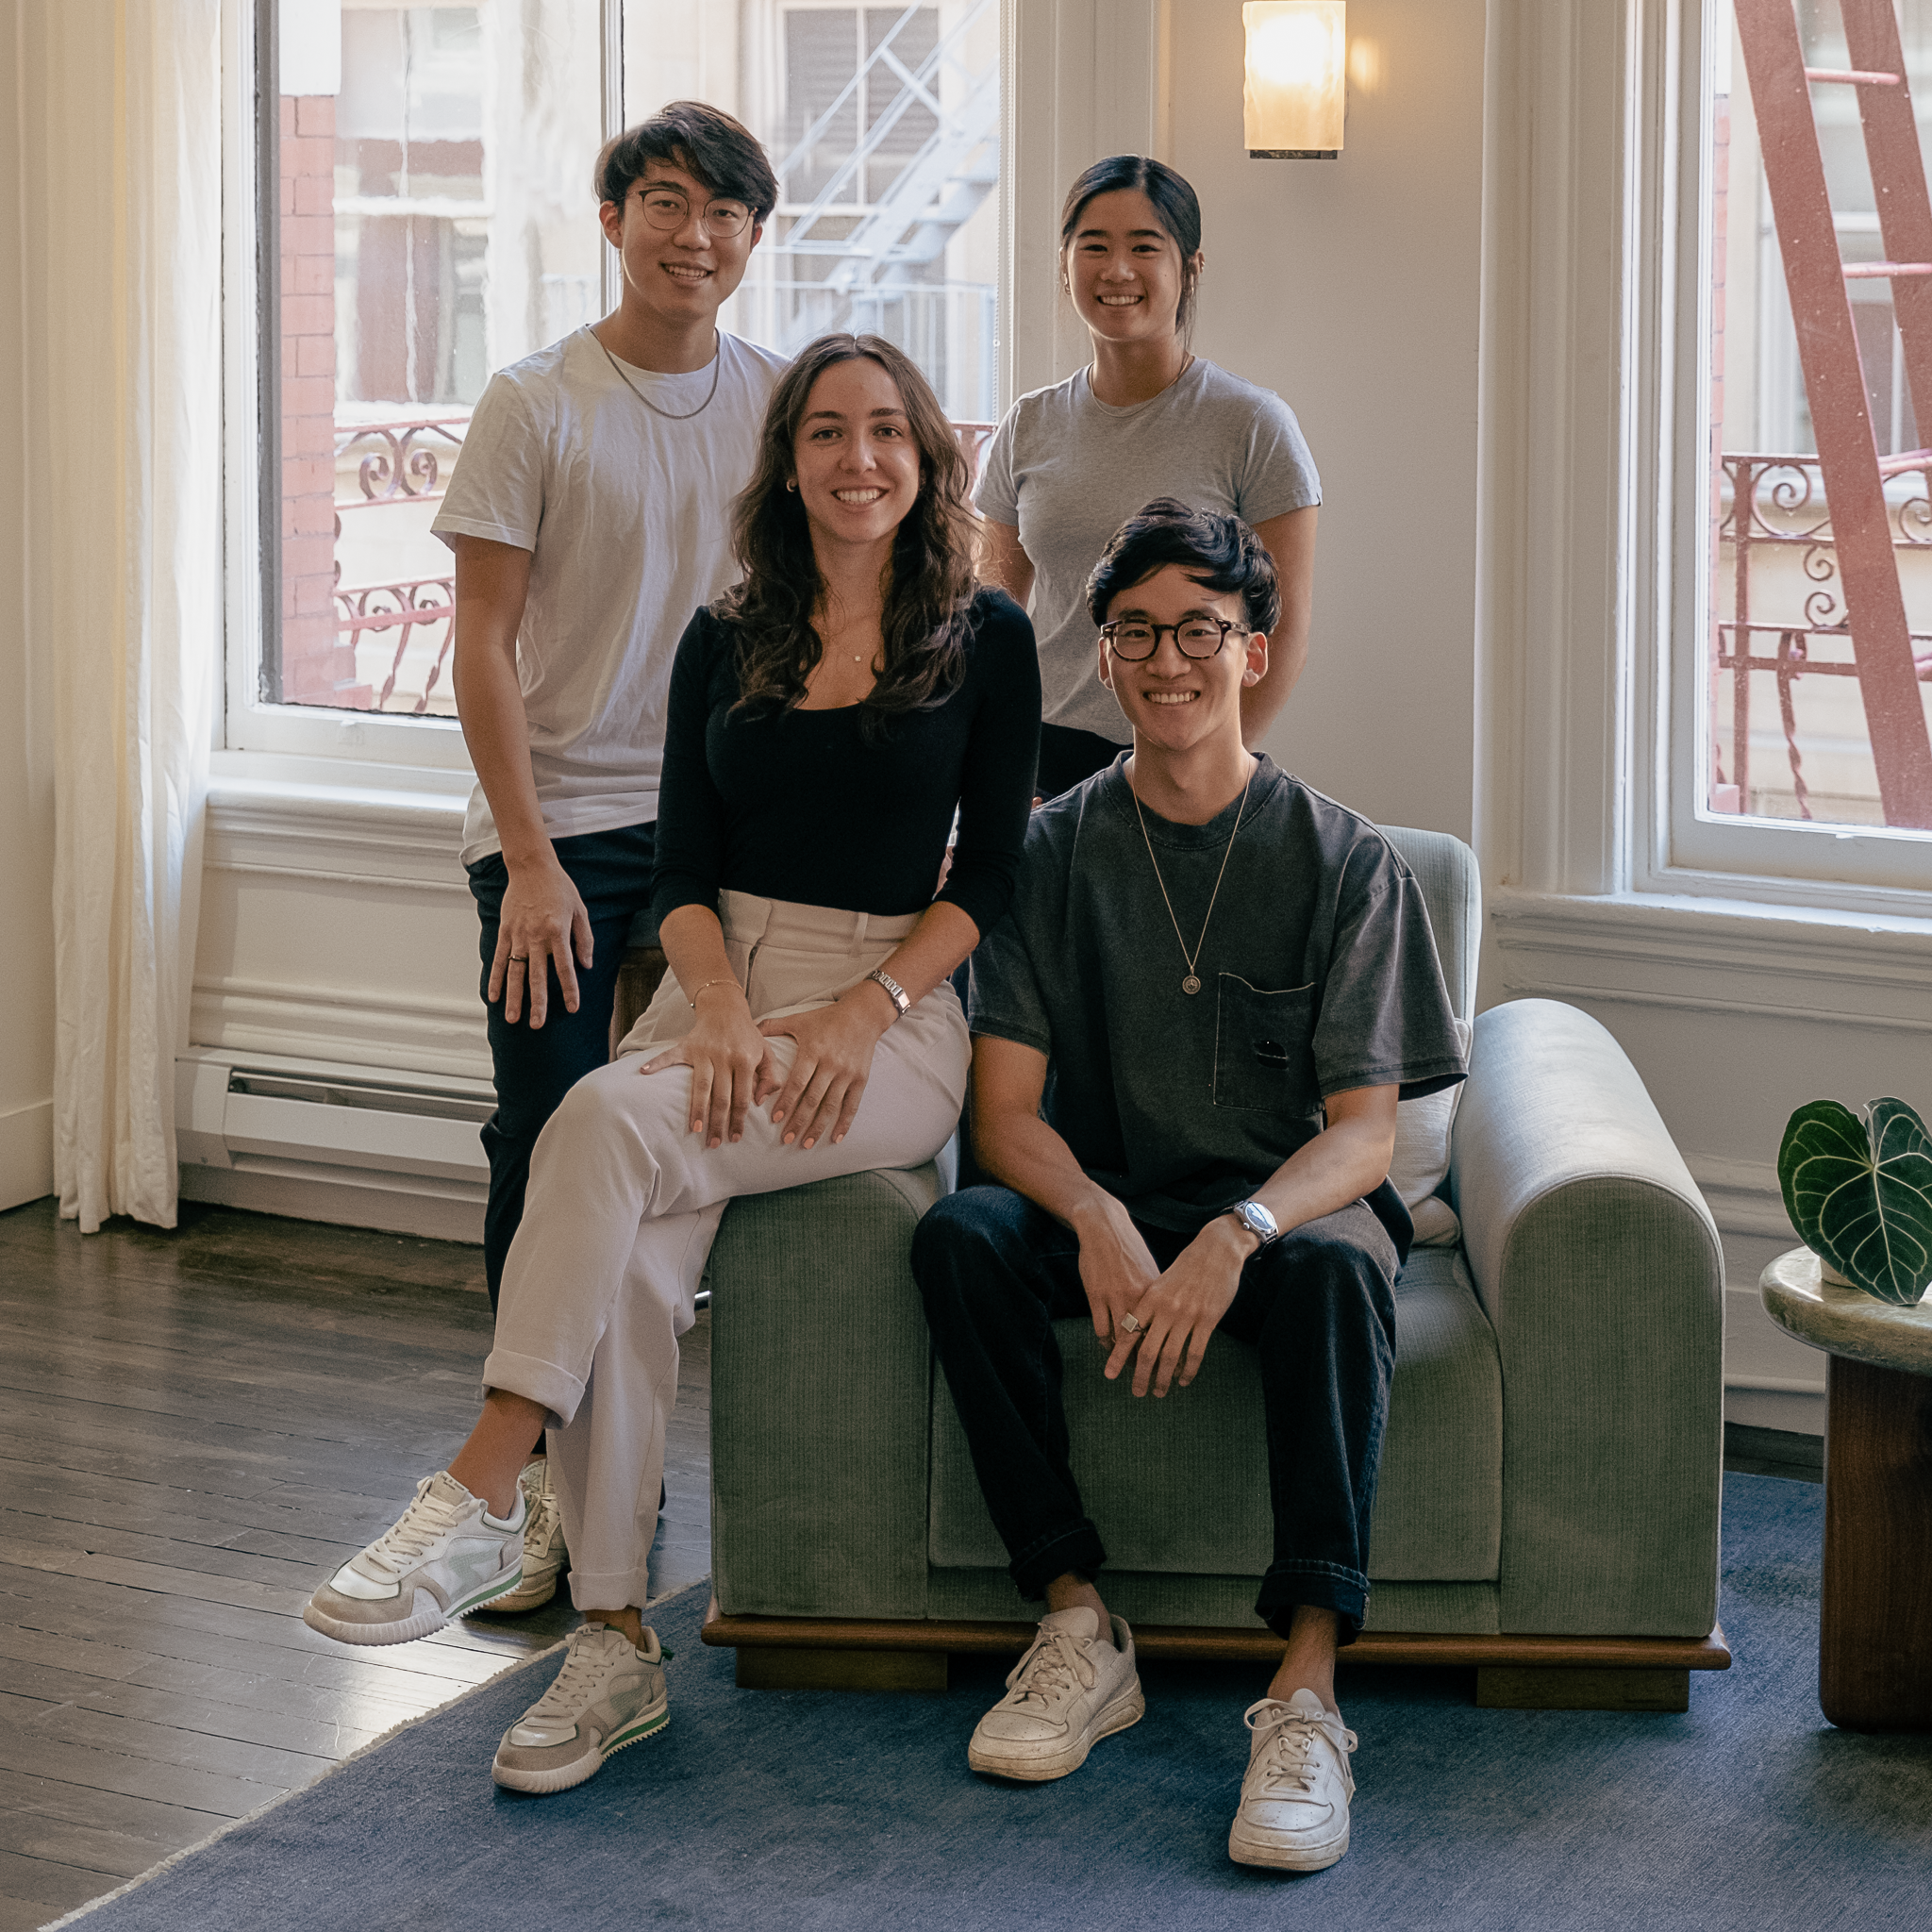 The Koop founding team: Daniel Ho, Natalia Murillo, Ivy Tsang, and Conner Chyung